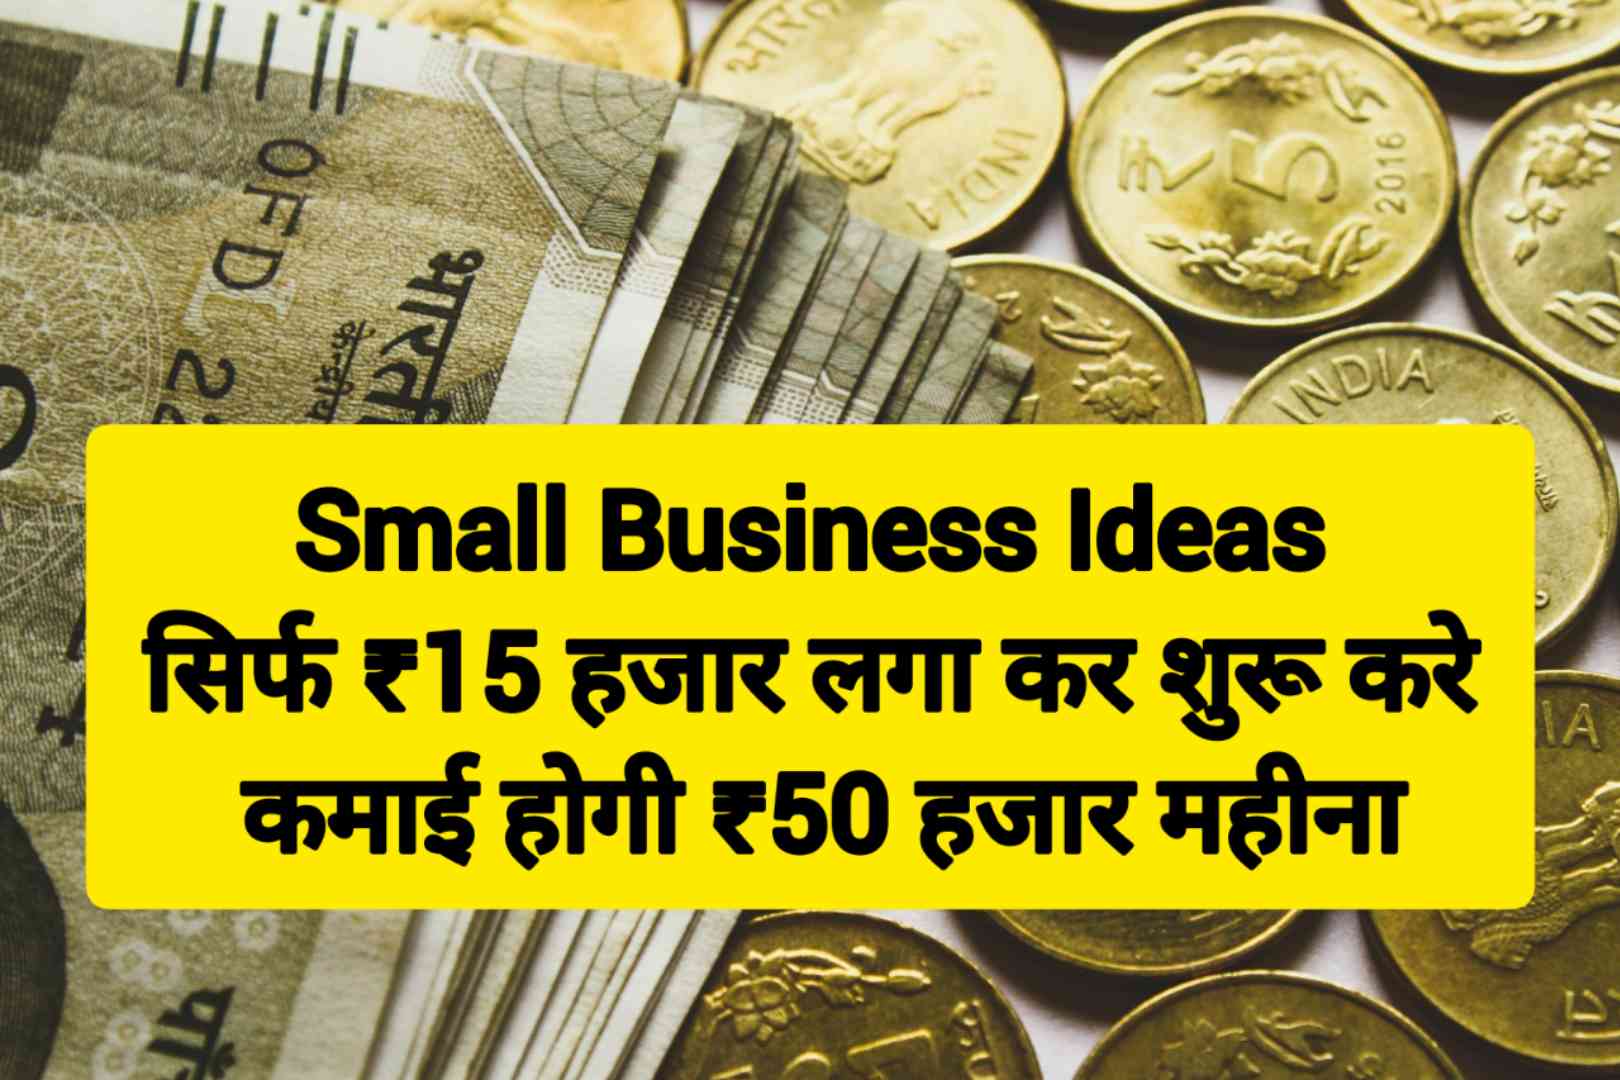 Small Business Ideas : सिर्फ ₹15 हजार लगा कर शुरू करे, कमाई होगी ₹50 हजार महीना